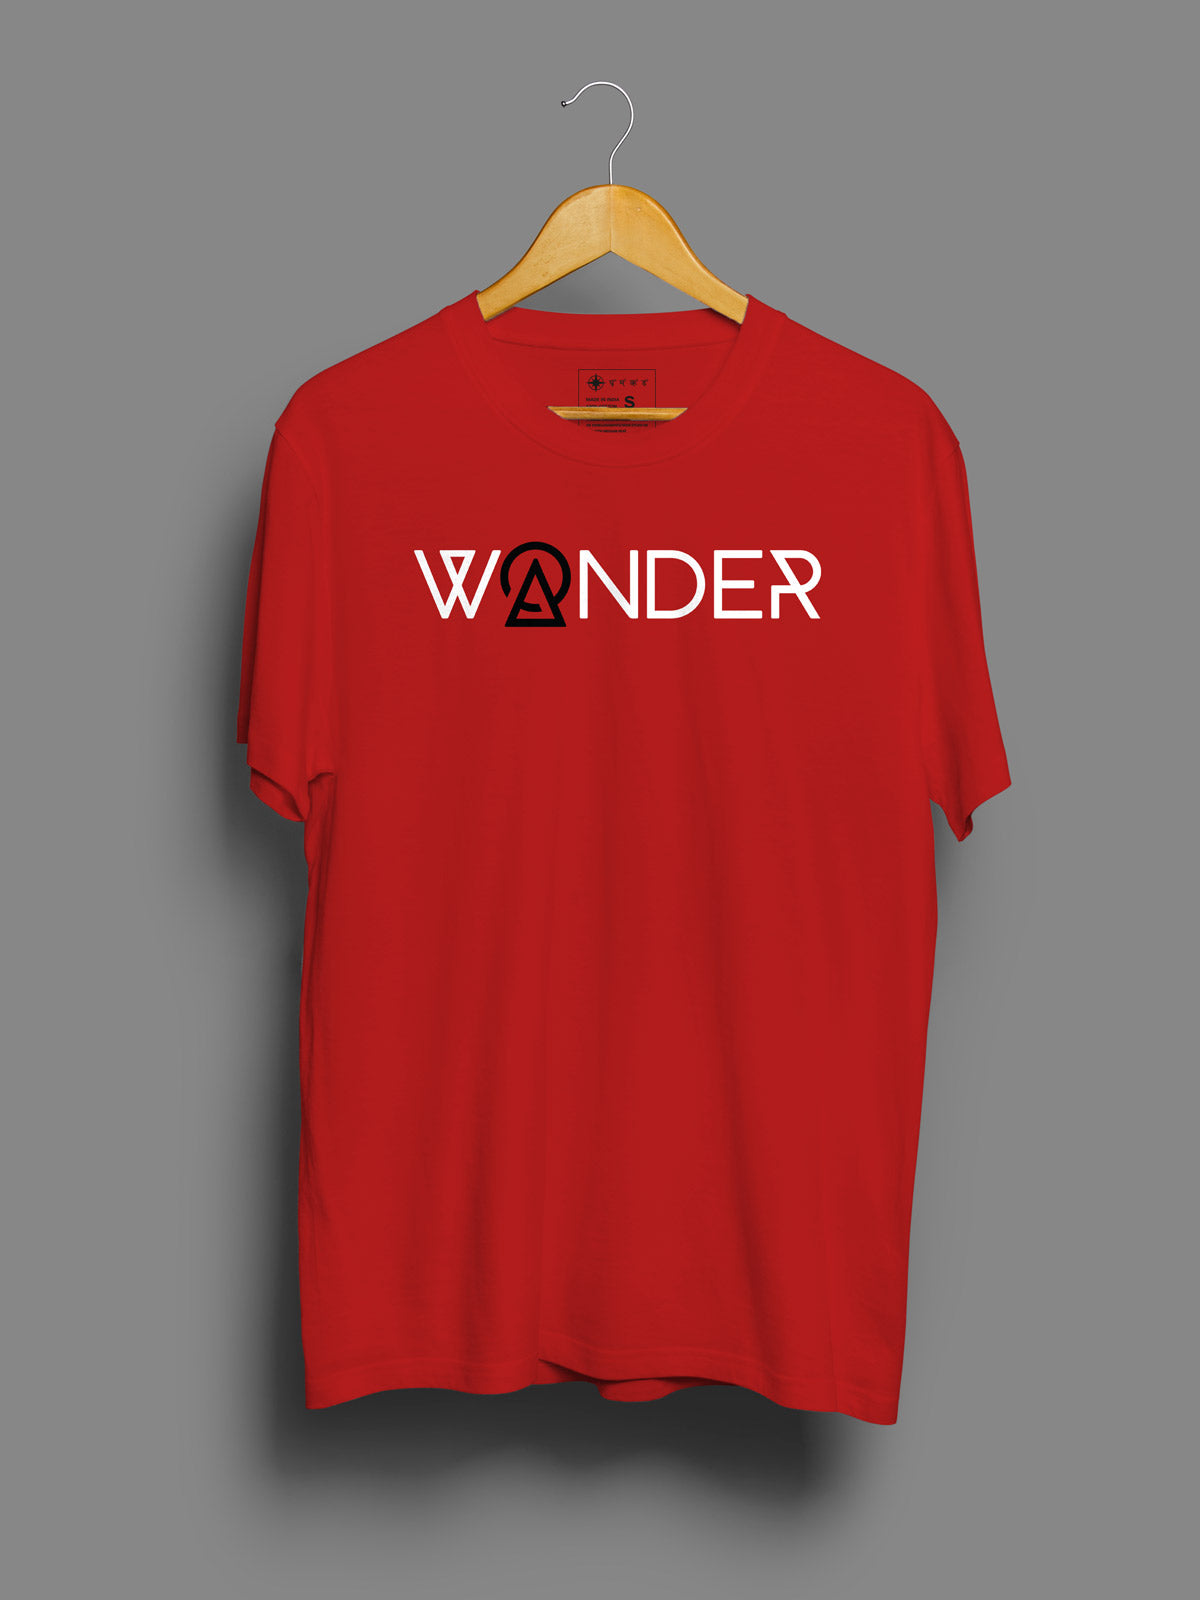 Wonder-Wander-printed-t-shirt-for-men  by Ghumakkad